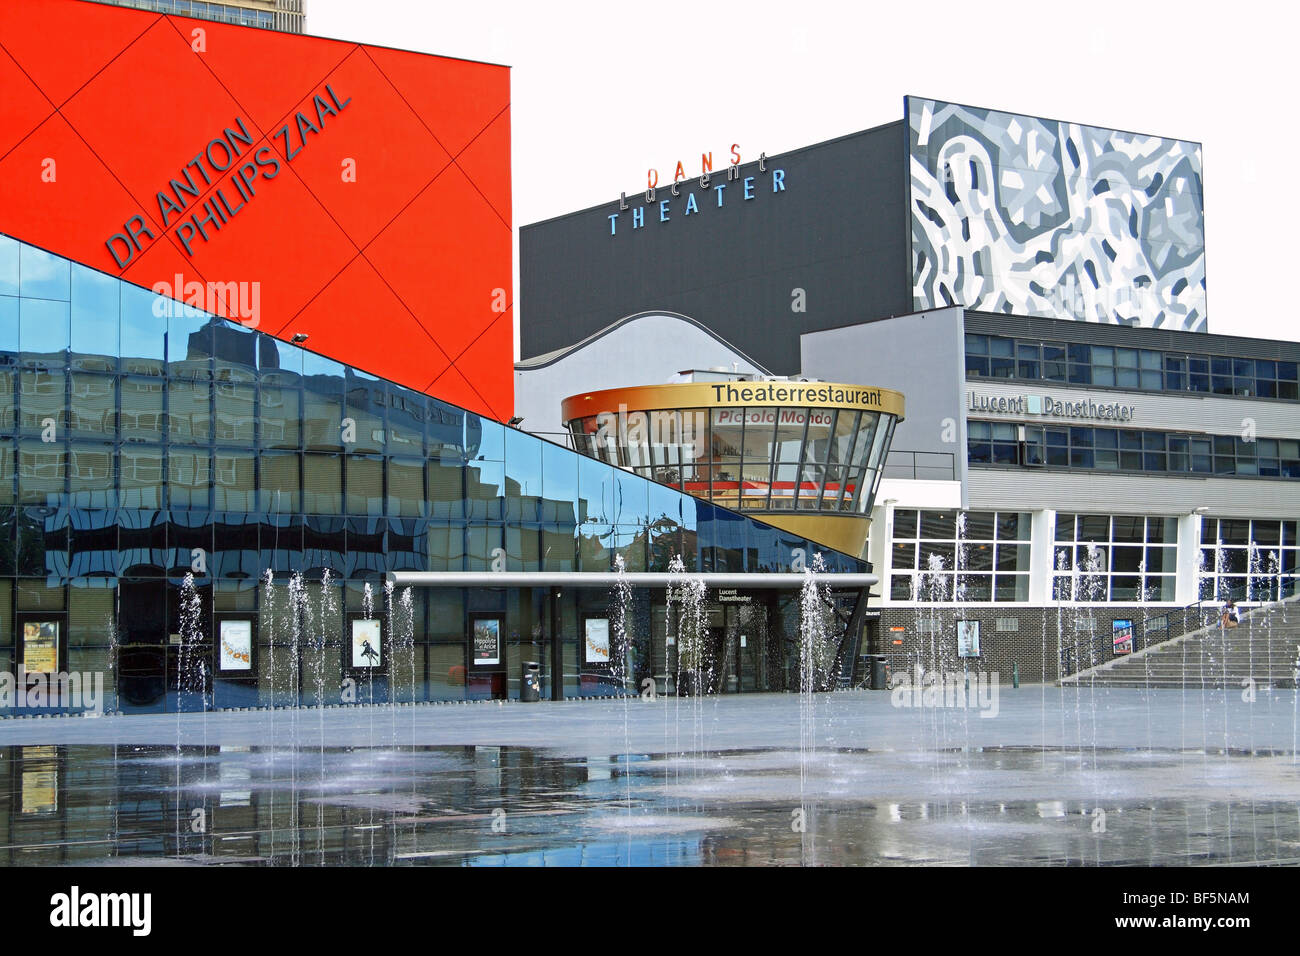 Lucent Dance Theatre / Anton Philipszaal complex, The Hague, Netherlands Stock Photo